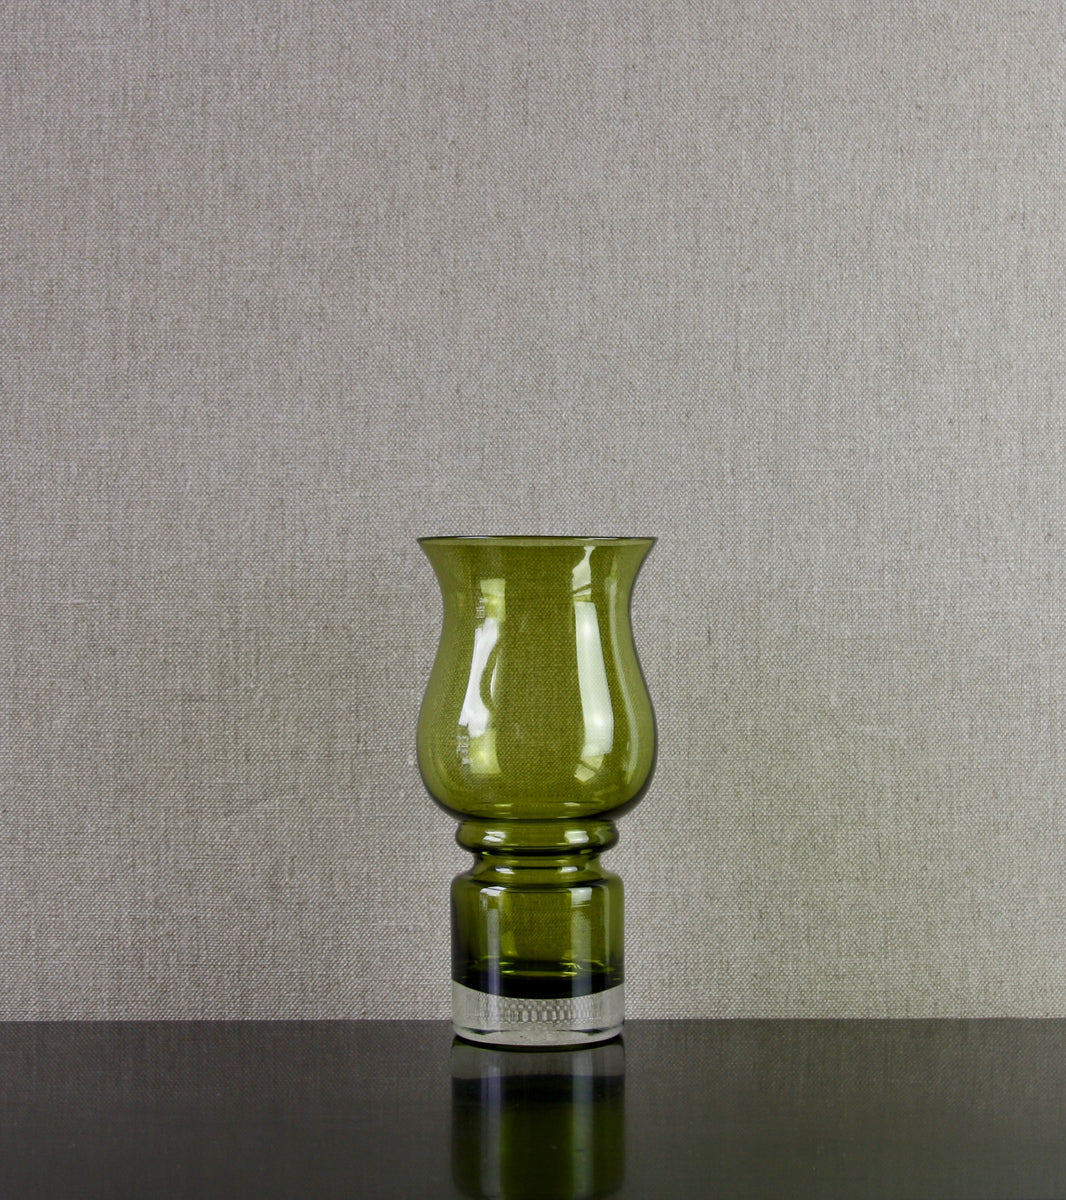 Olive Green Model 1512 "Tulppaani" (Tulip) Vase / Tamara Aladin, 1971